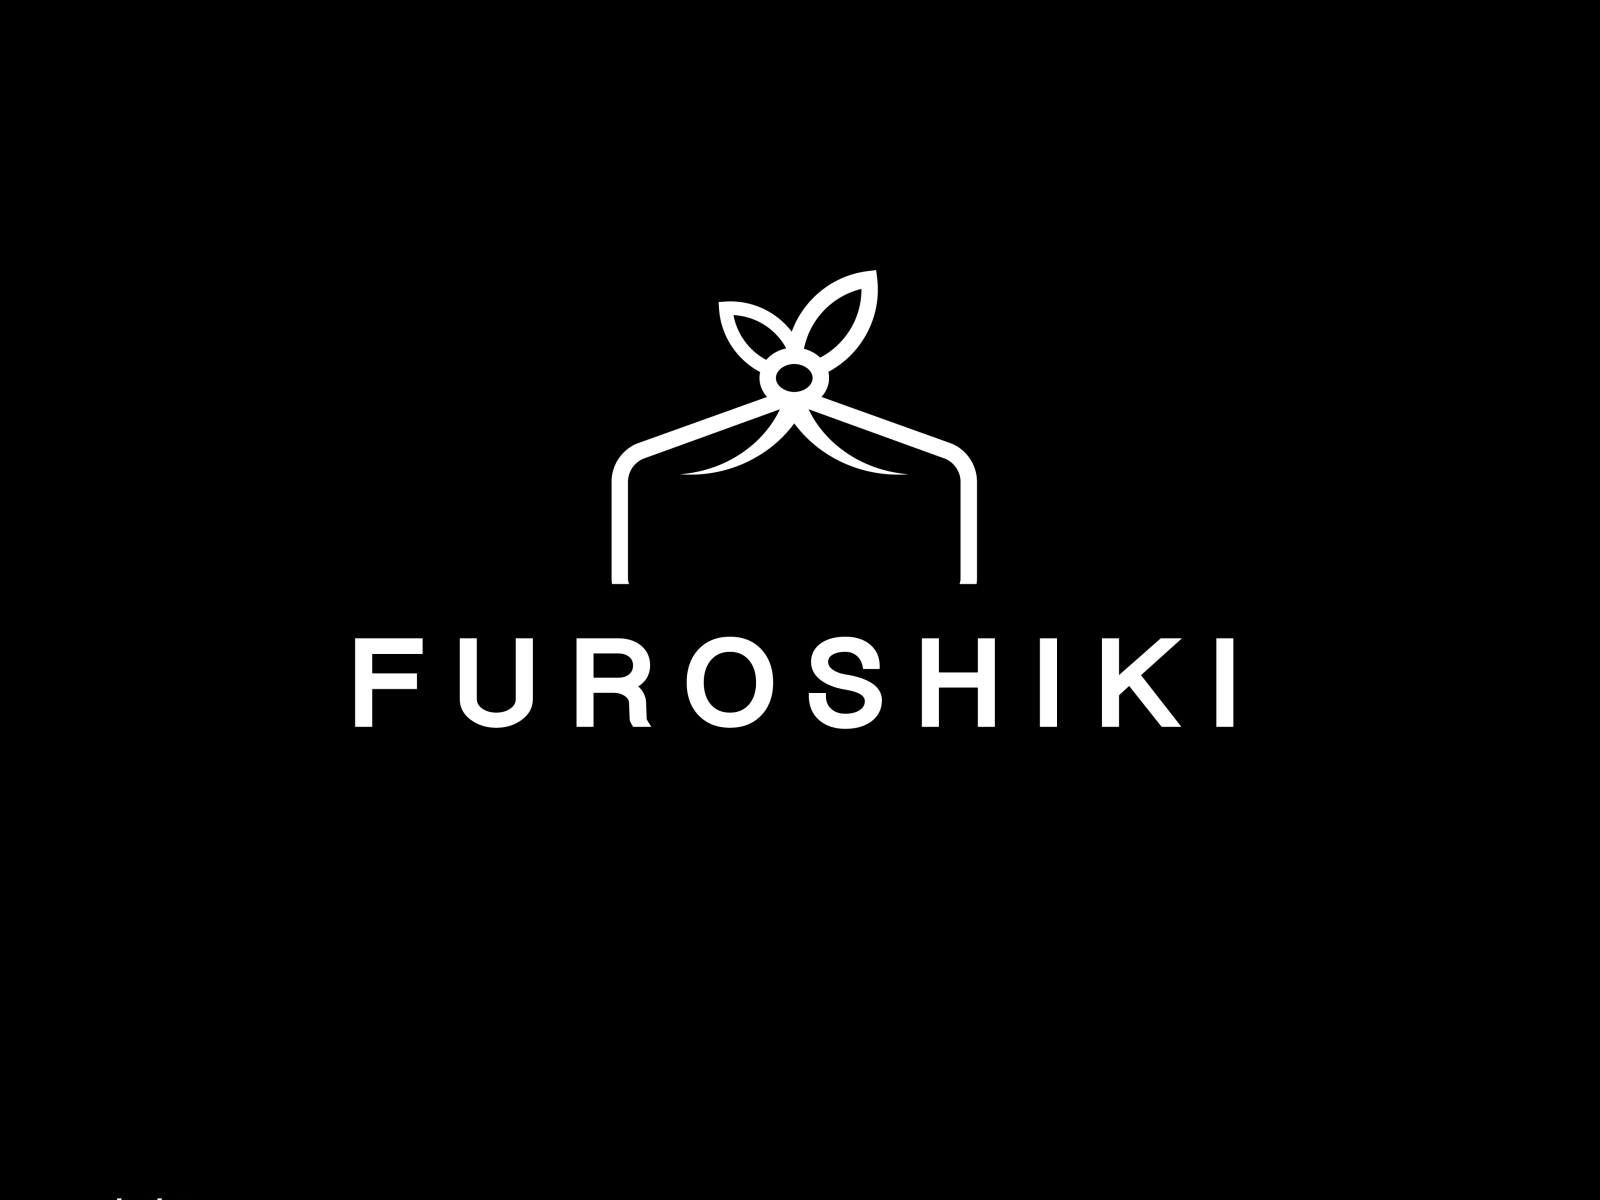 Furoshiki logo by Islam Biko on Dribbble